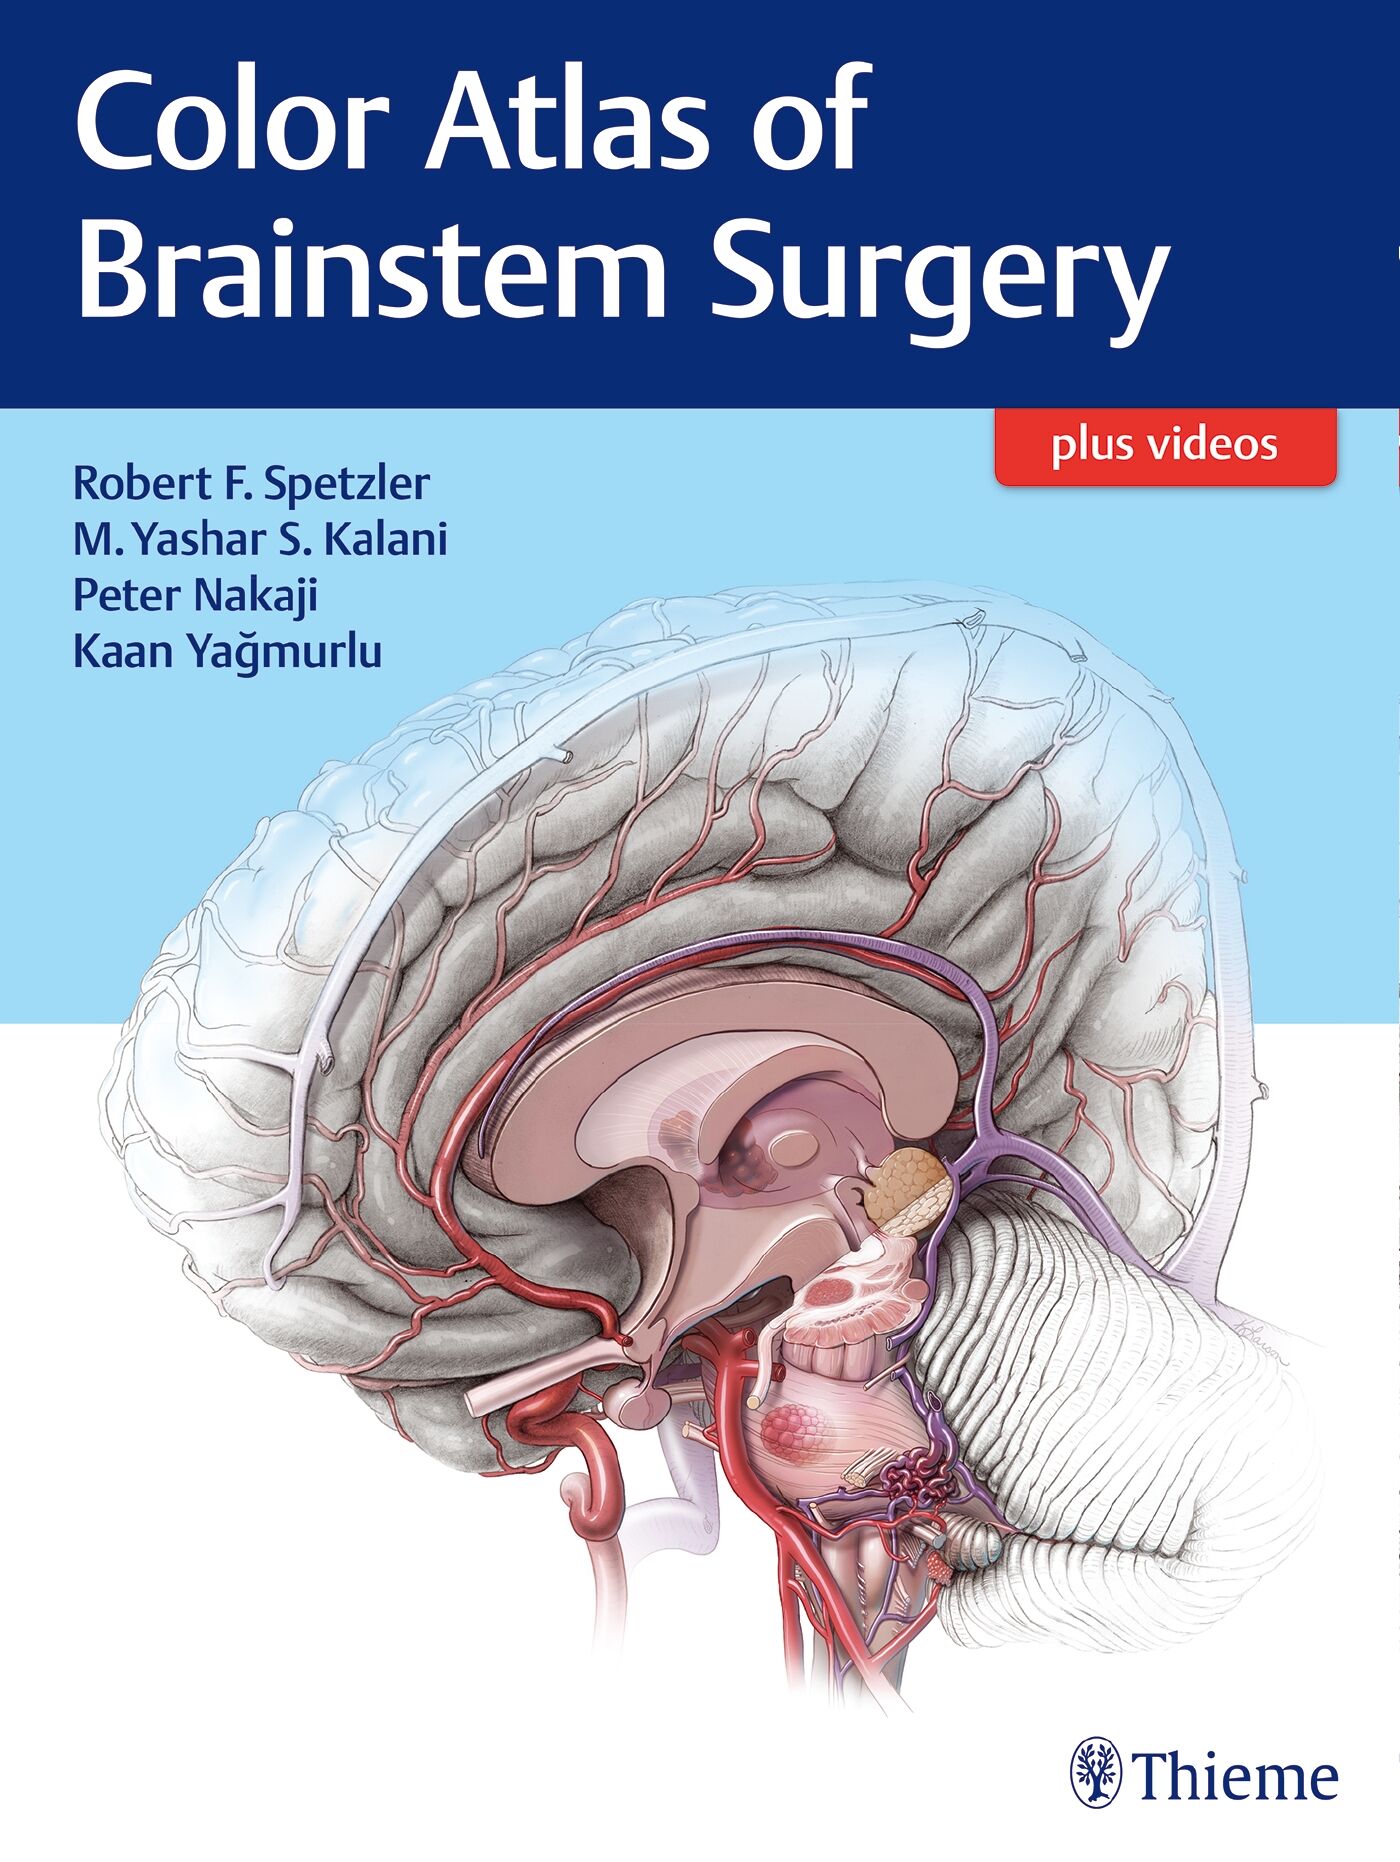 Color Atlas of Brainstem Surgery | 9781626230279 | Thieme Webshop